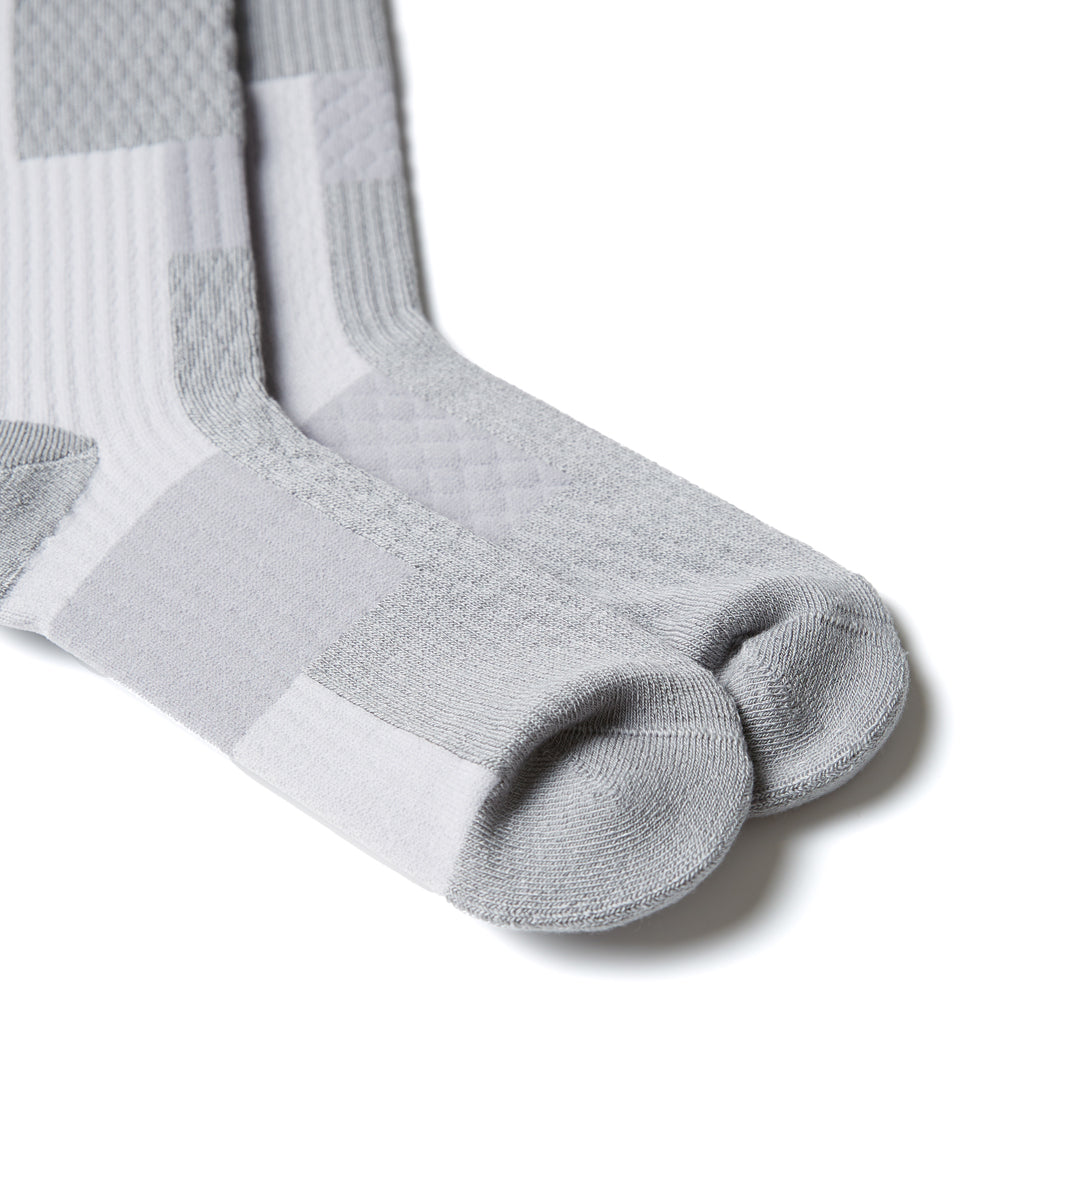 Tear Resistant Patch Socks (2pack)